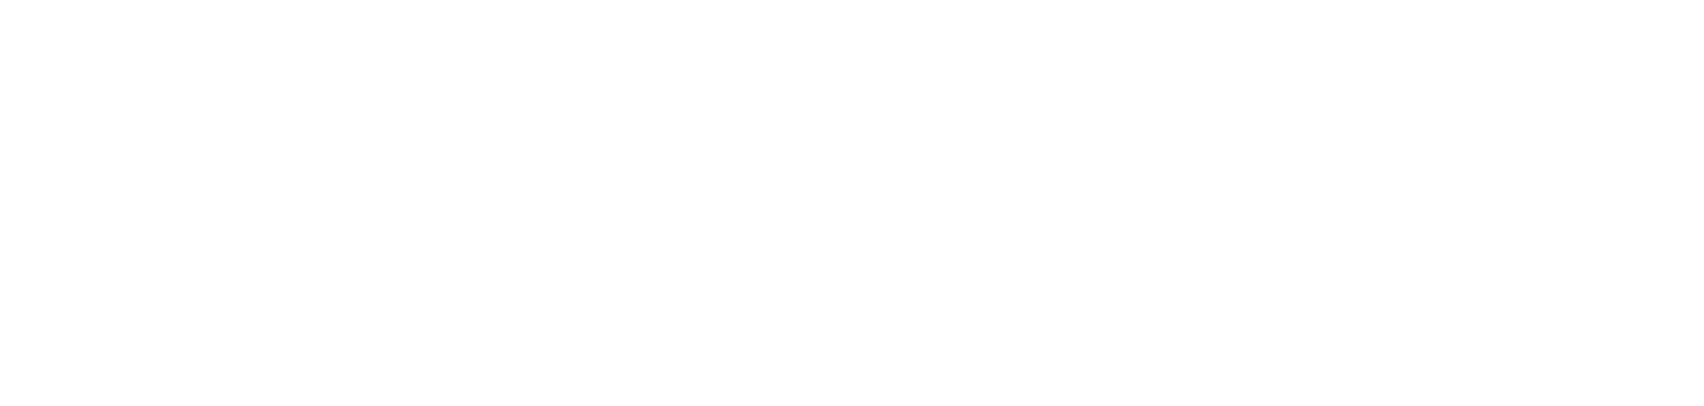 Asker Healthcare Group logo